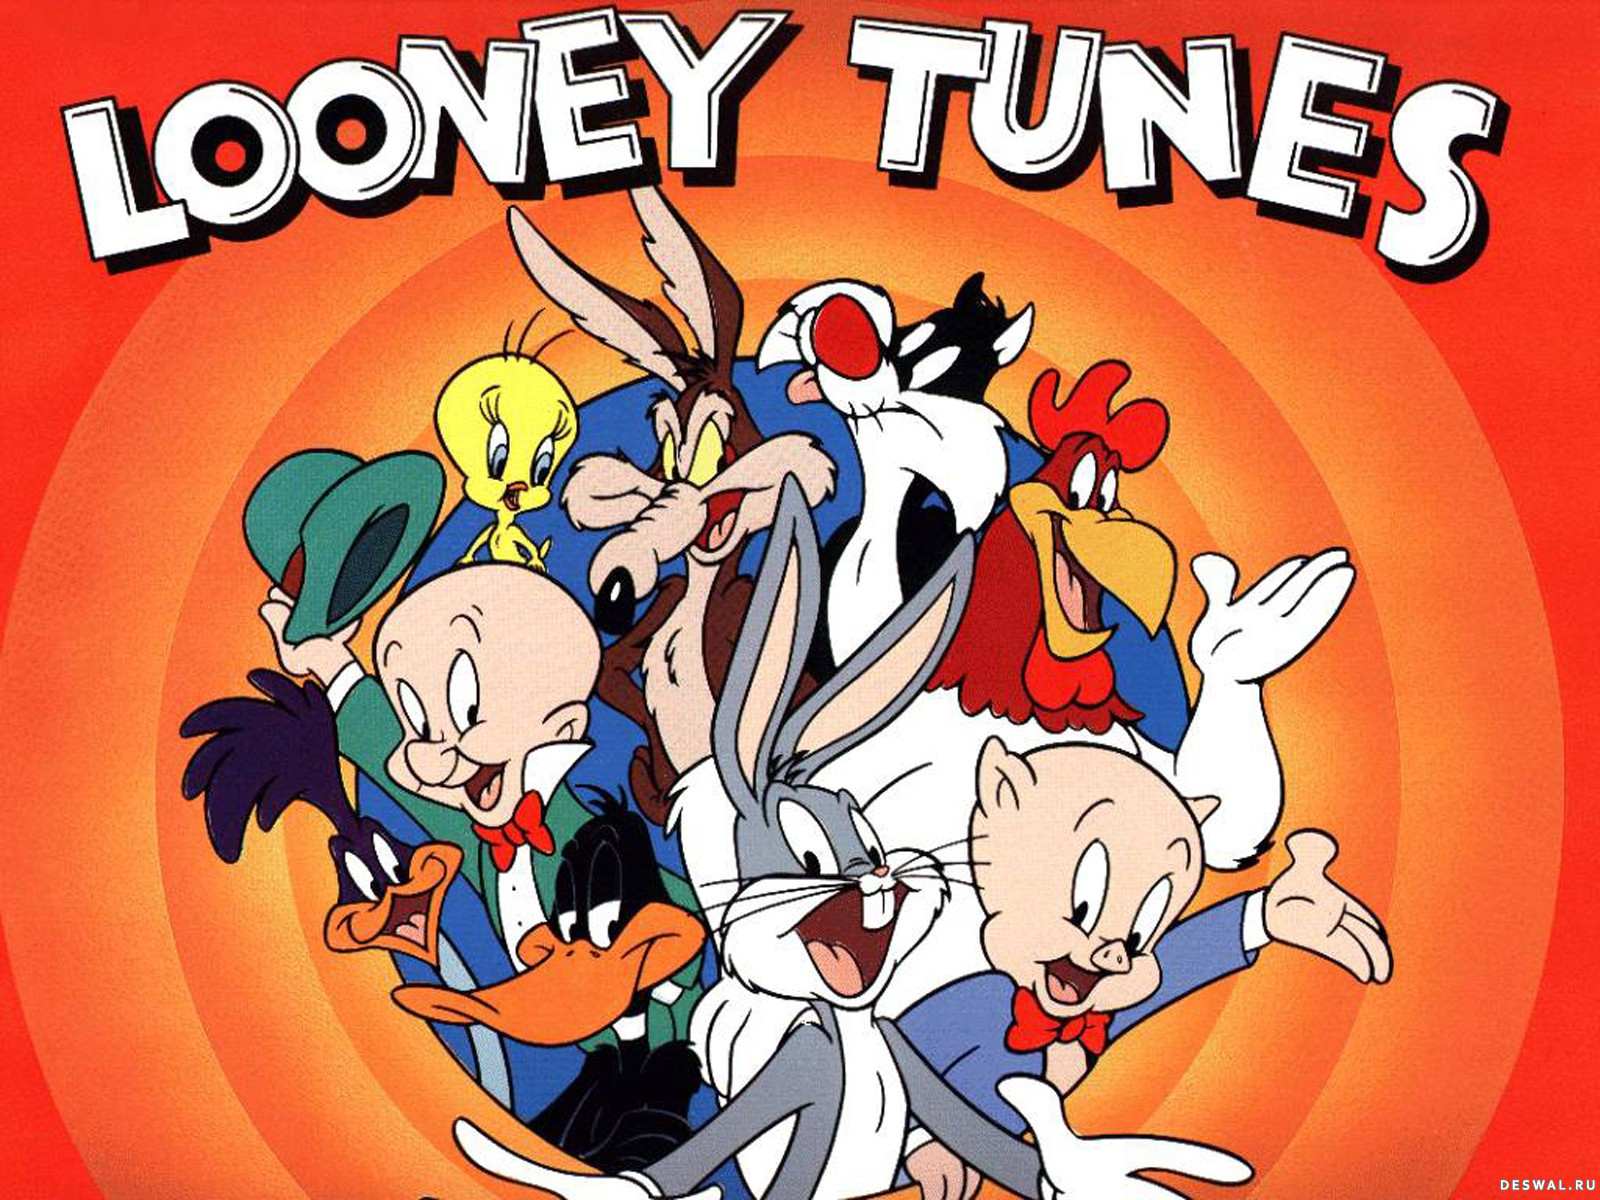 looney tunes, bugs bunny, tv show, daffy duck, elmer fudd, foghorn leghorn, porky pig, road runner, sylvester (looney tunes), tweety Free Stock Photo